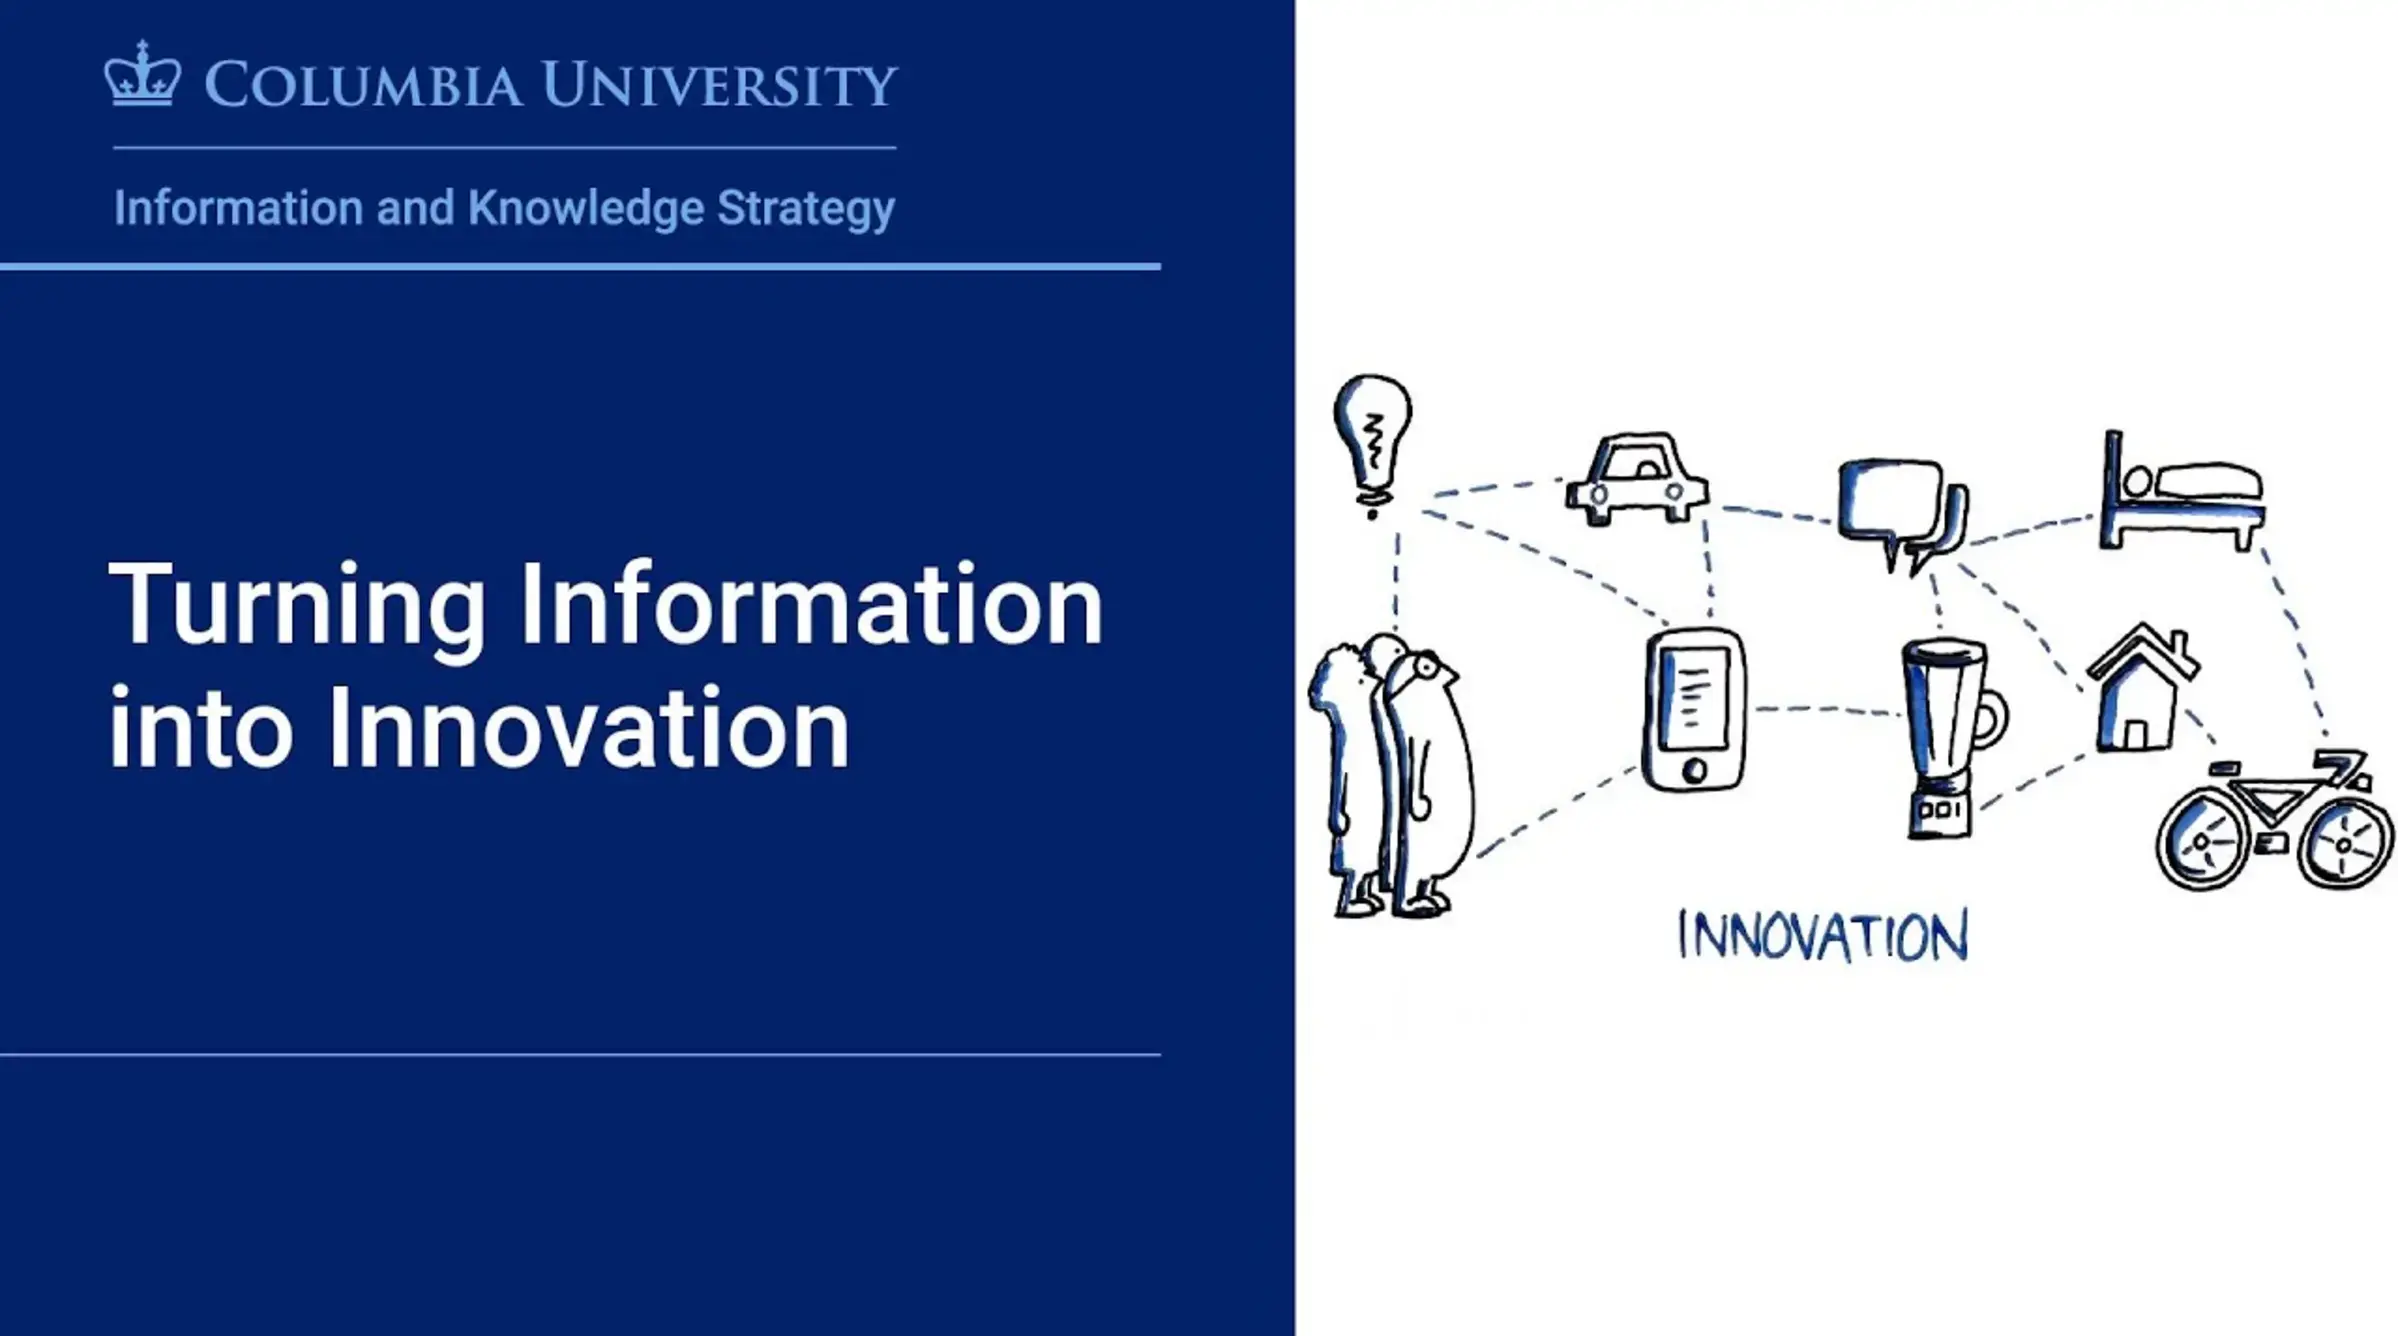  Turning Information into Innovation 